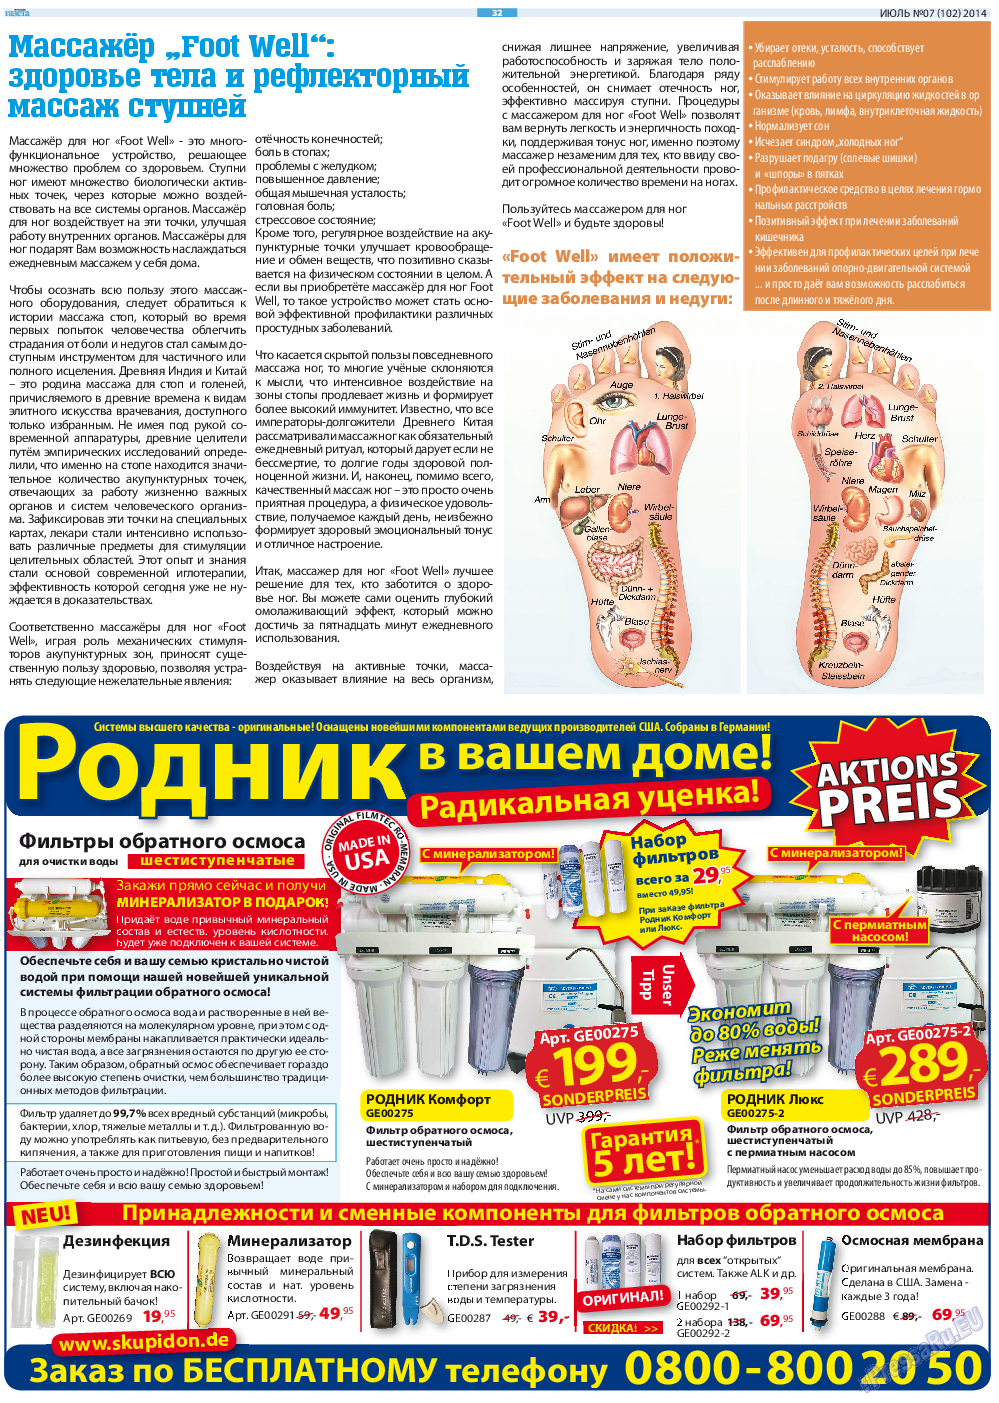 Русская Газета, газета. 2014 №7 стр.32